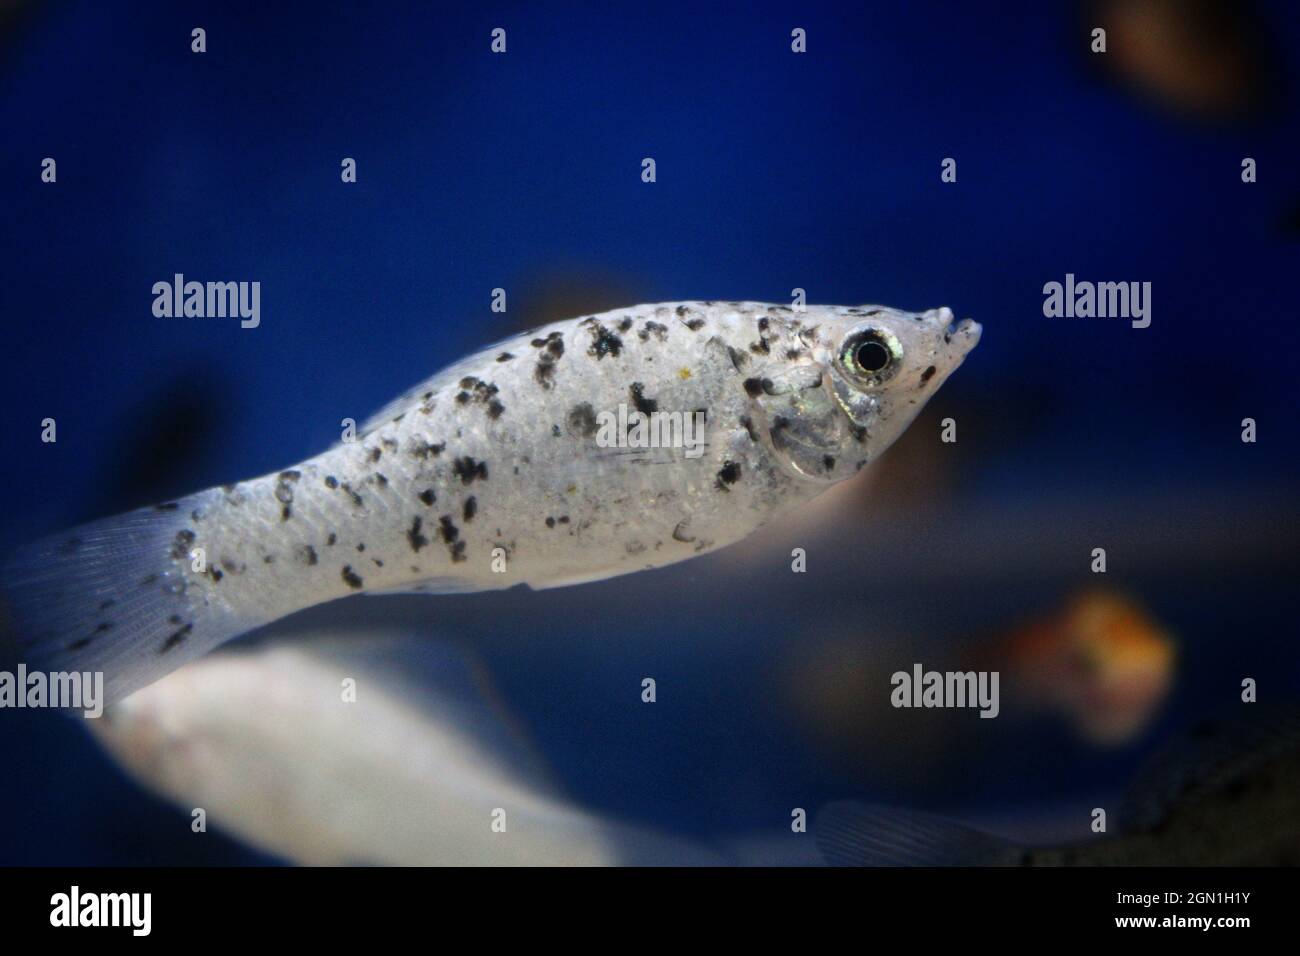 Closeup of a molly fish in an aquarium Stock Photo